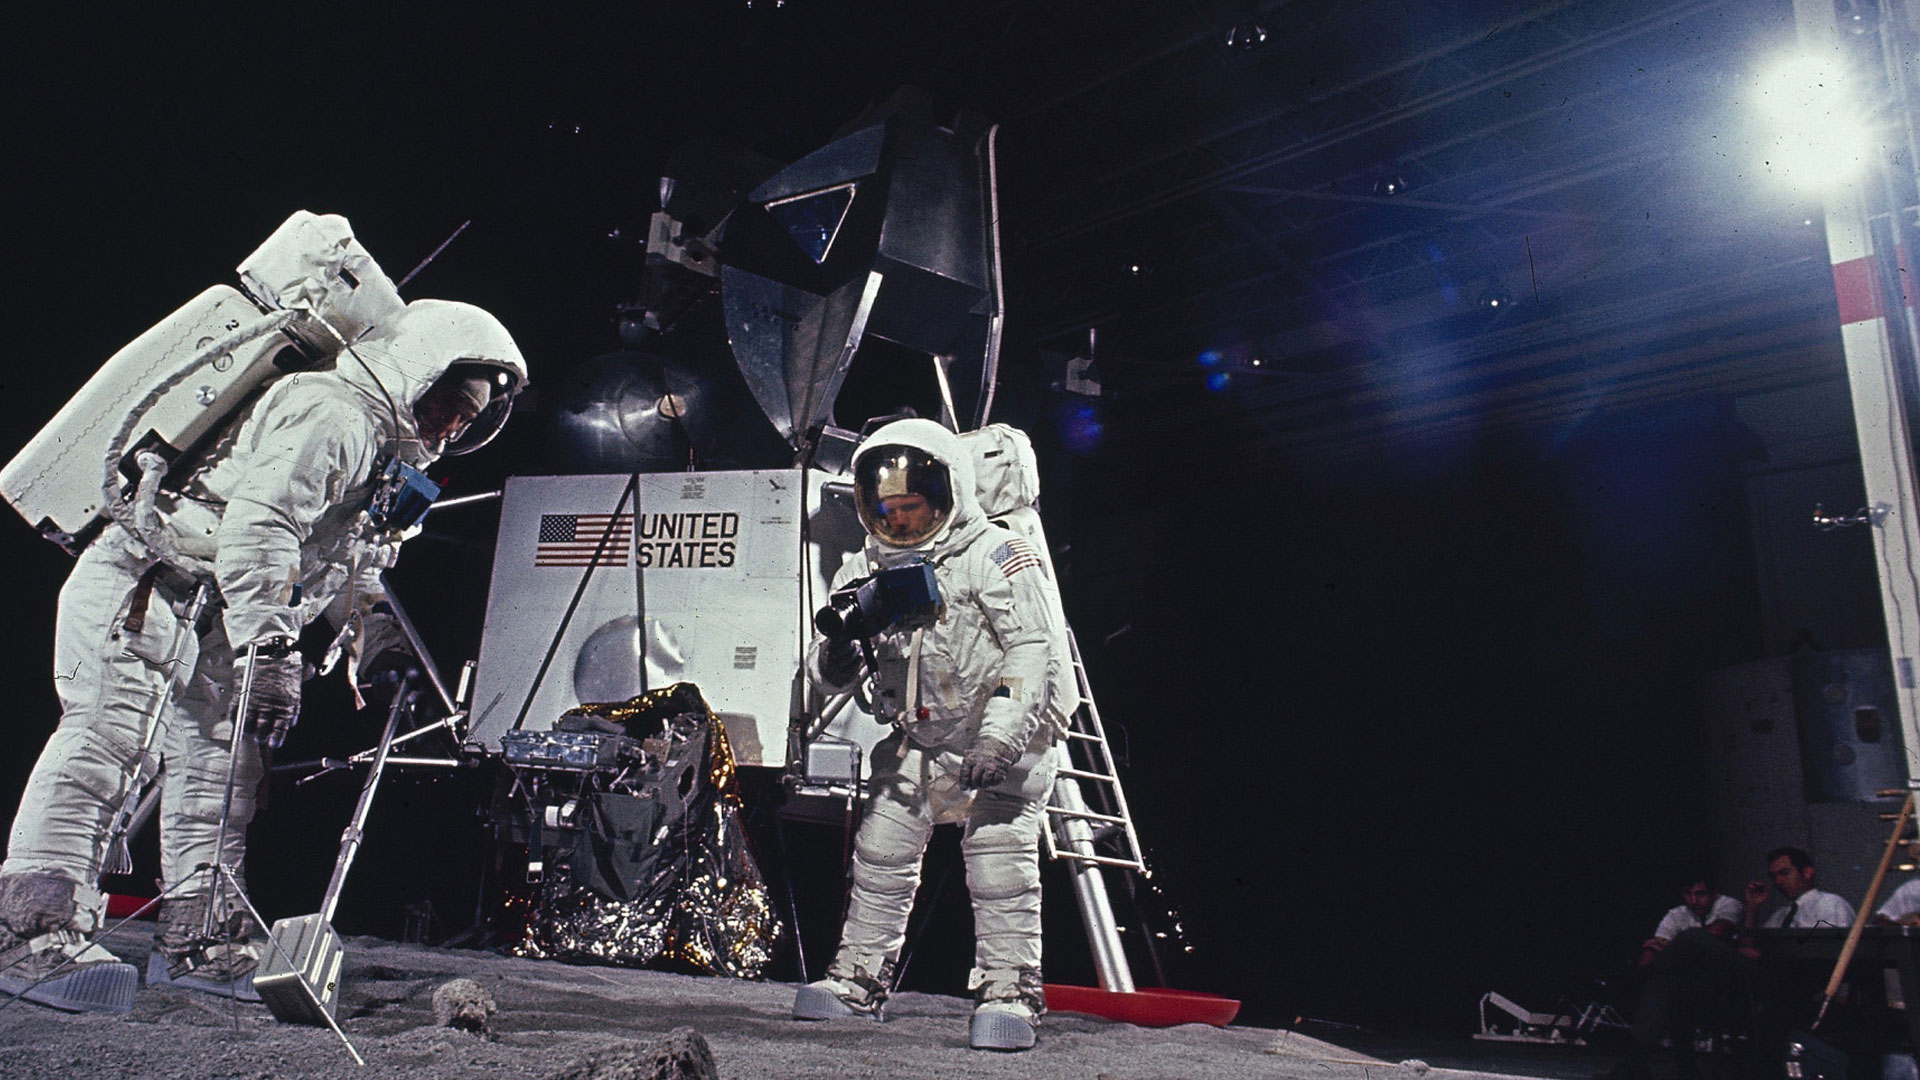 Страны достигшие луны. Аполлон 11 1969. Американцы на Луне 1969. Астронавты на Луне.